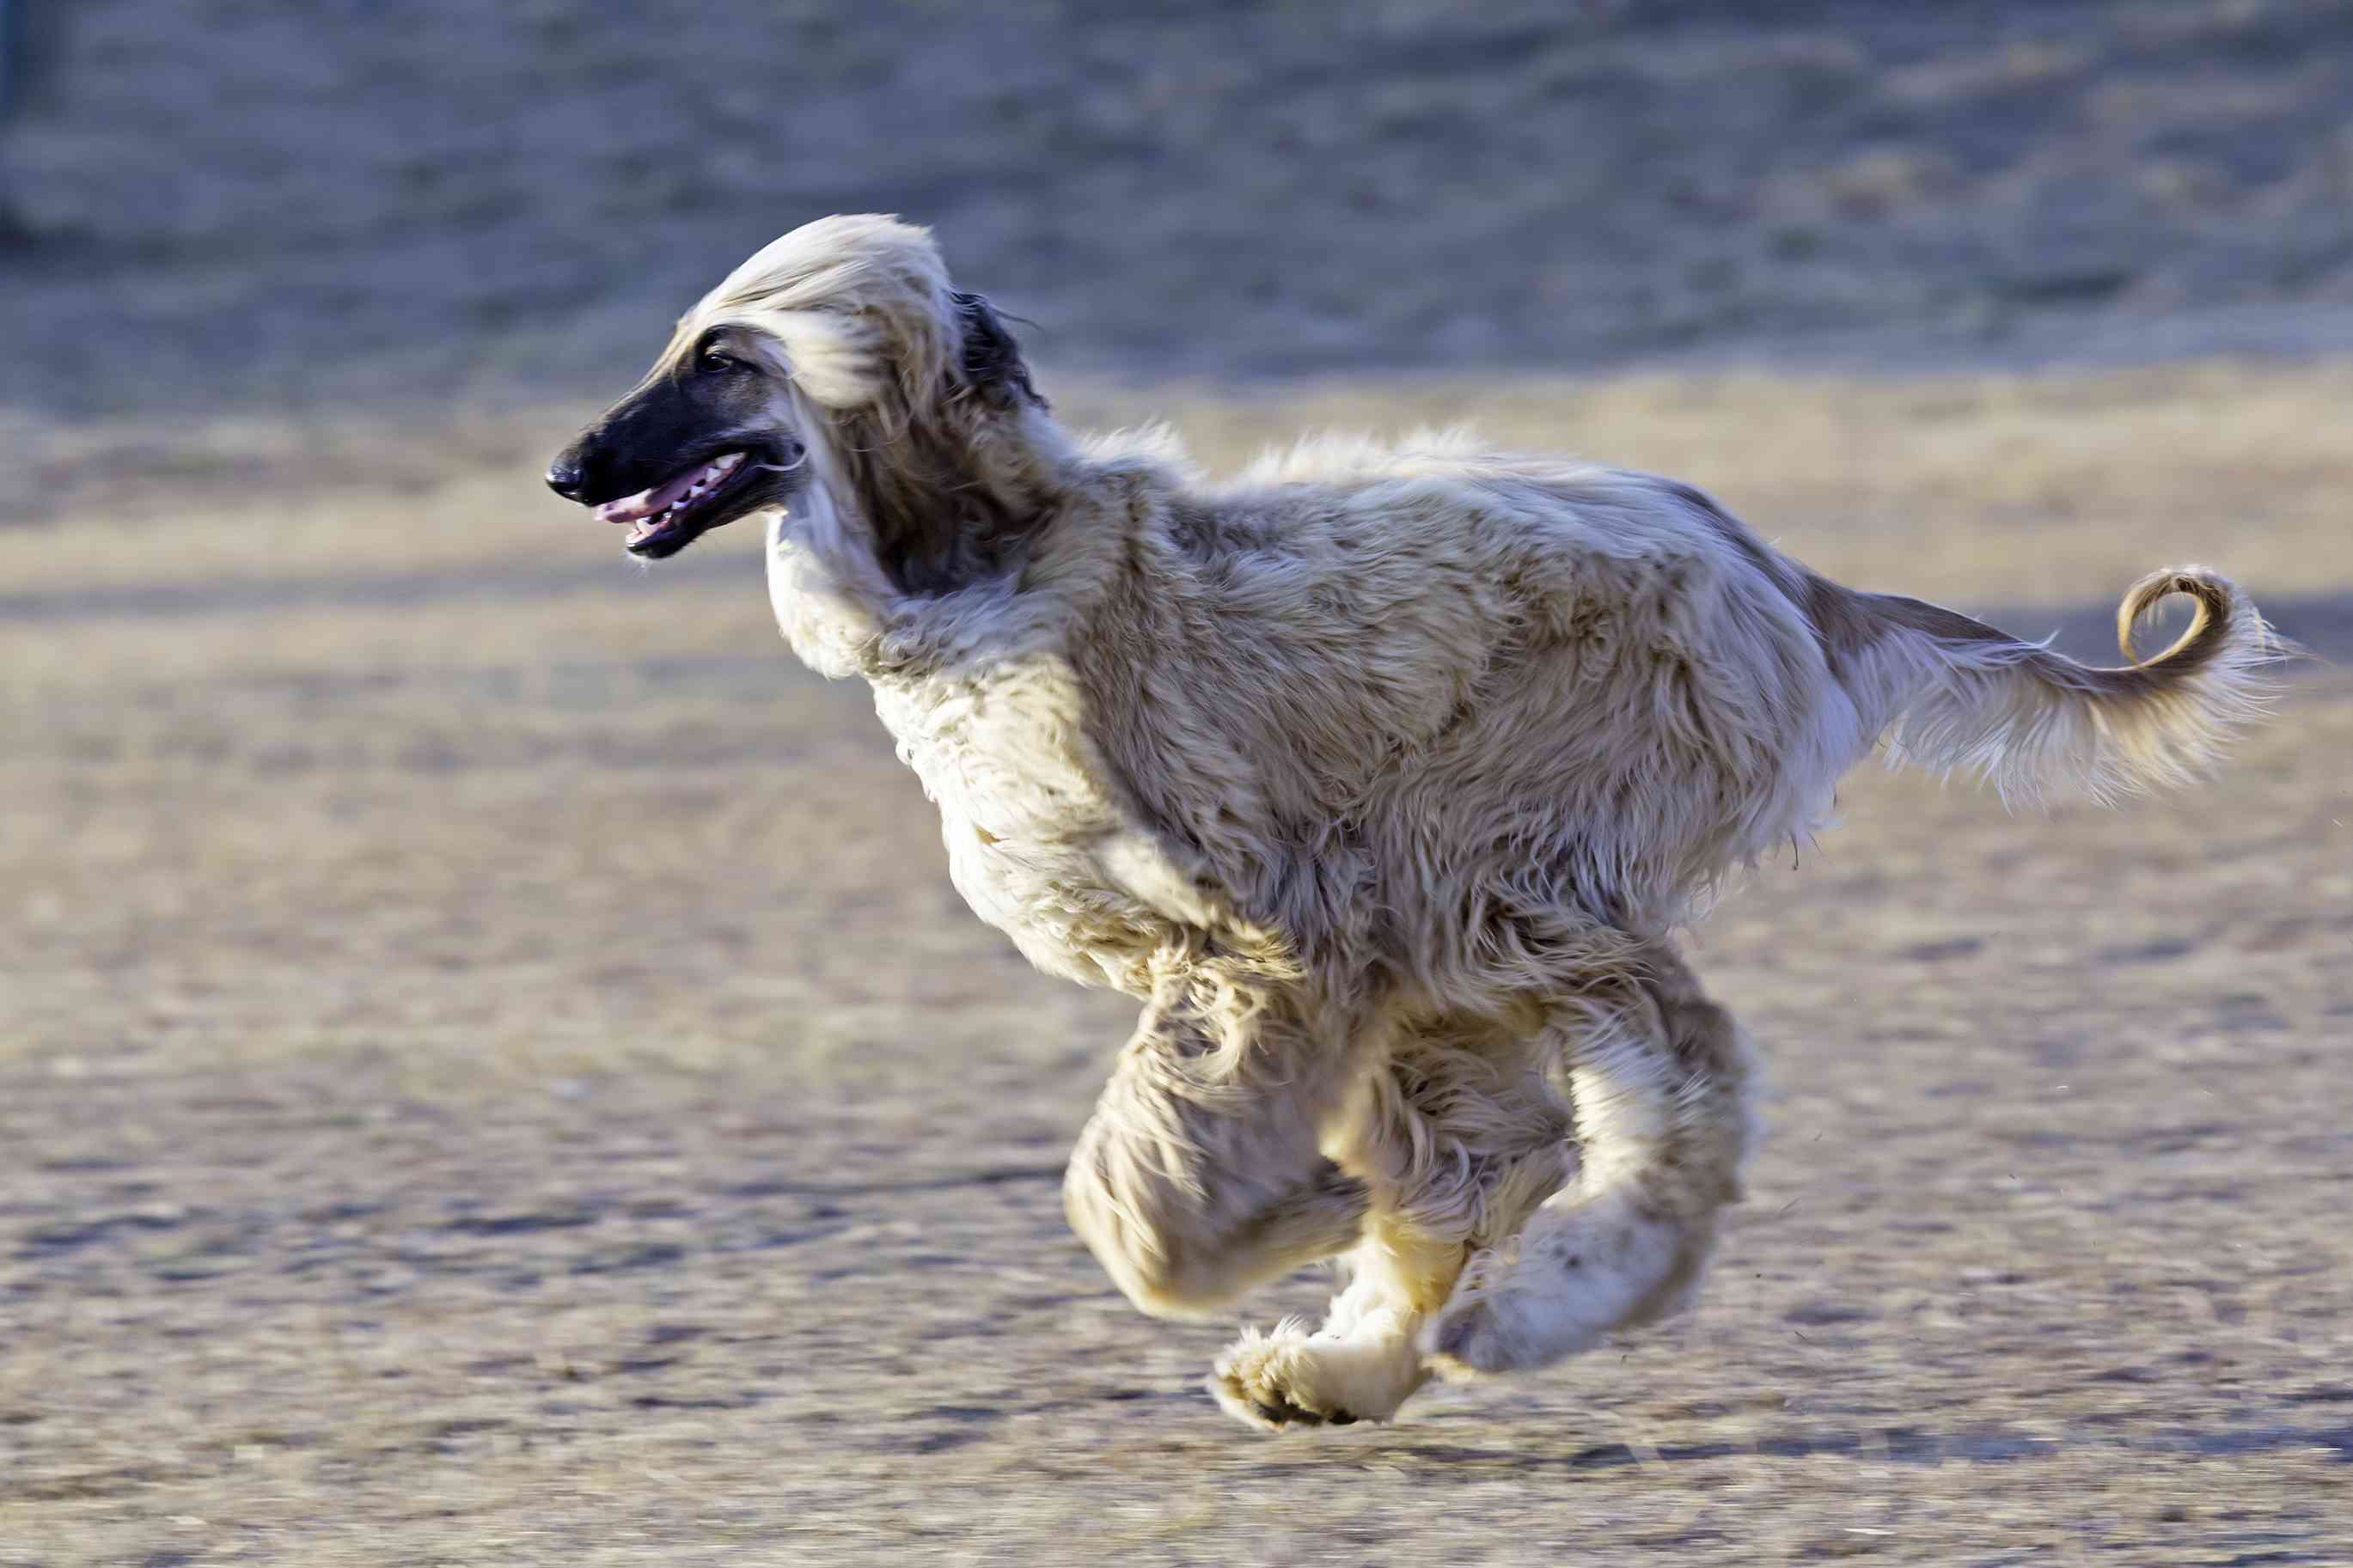 Afghan hound running across sand